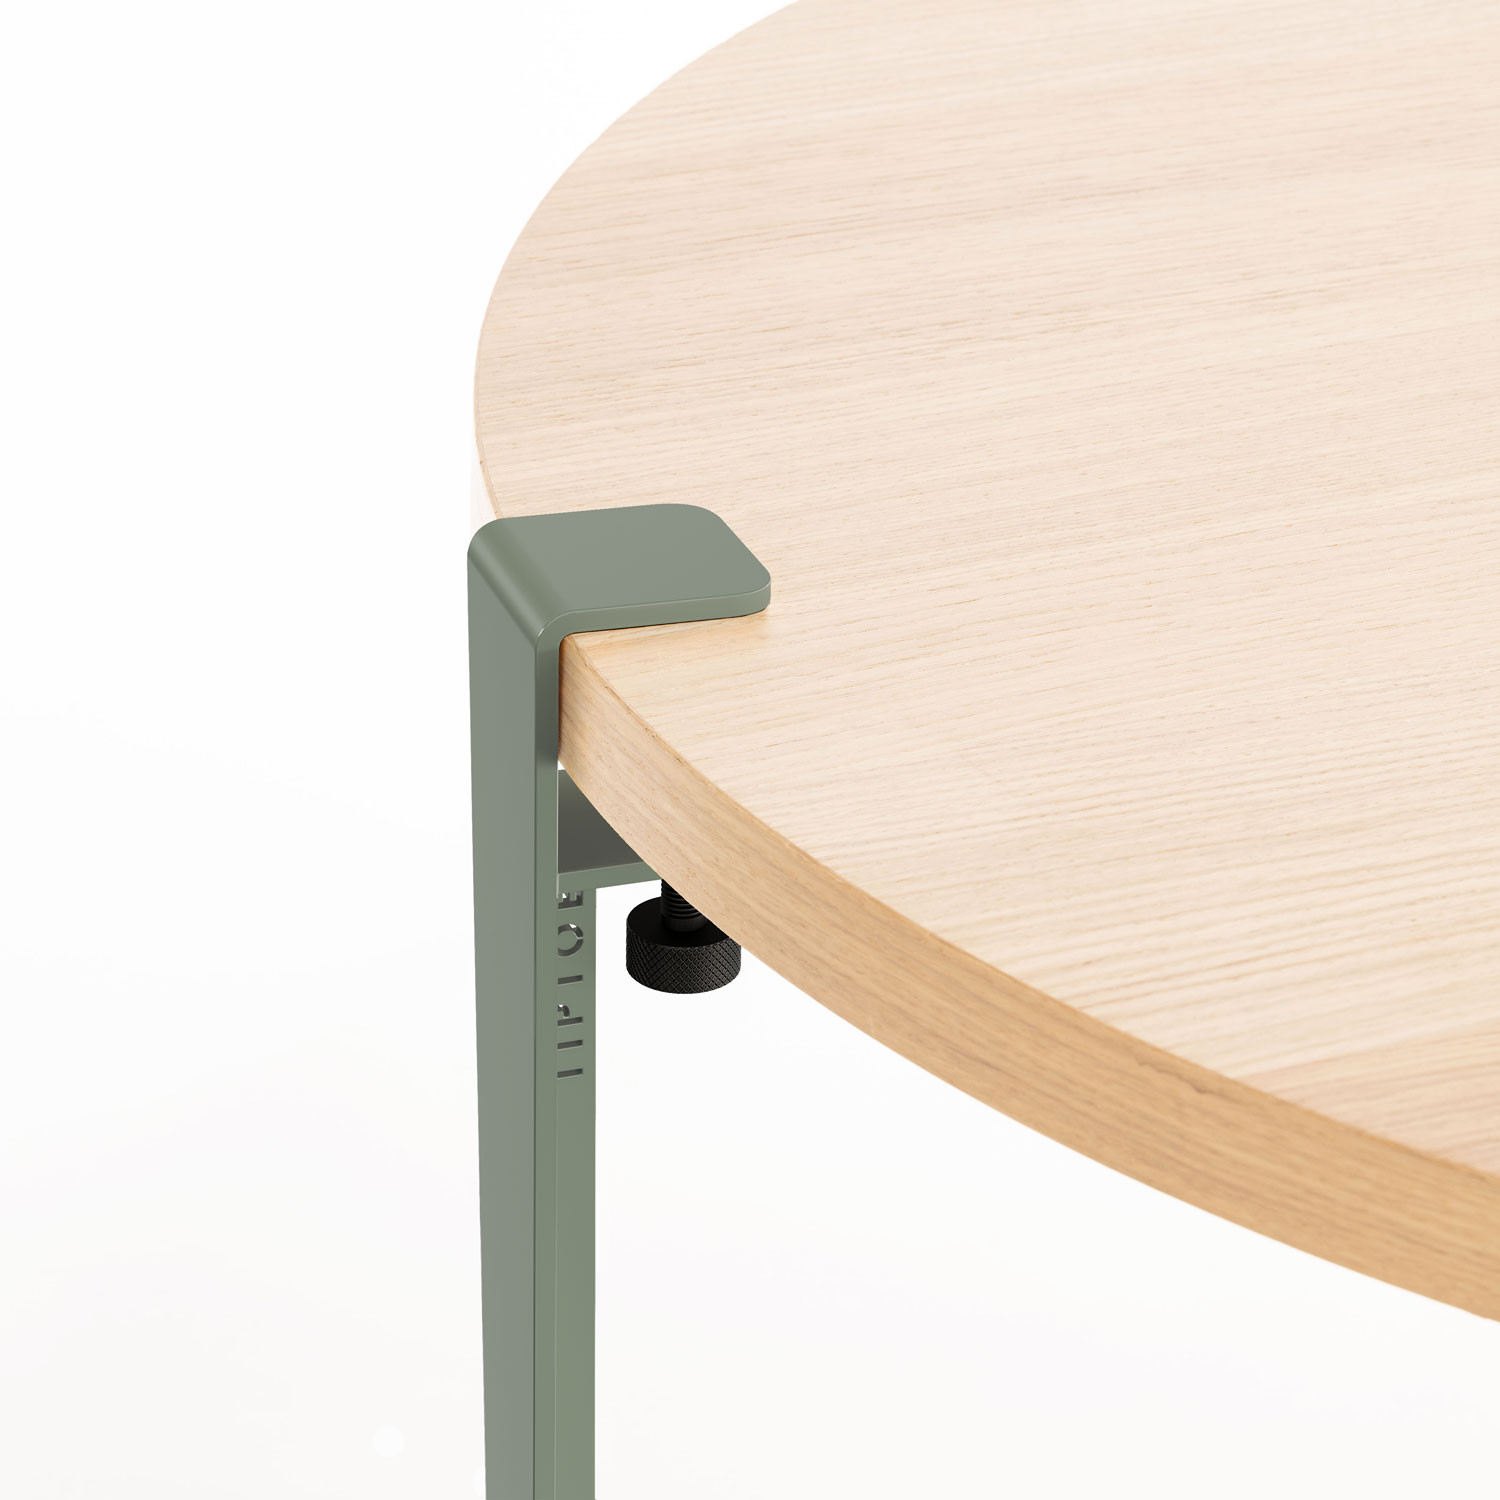 BROOKLYN coffee table – solid oak